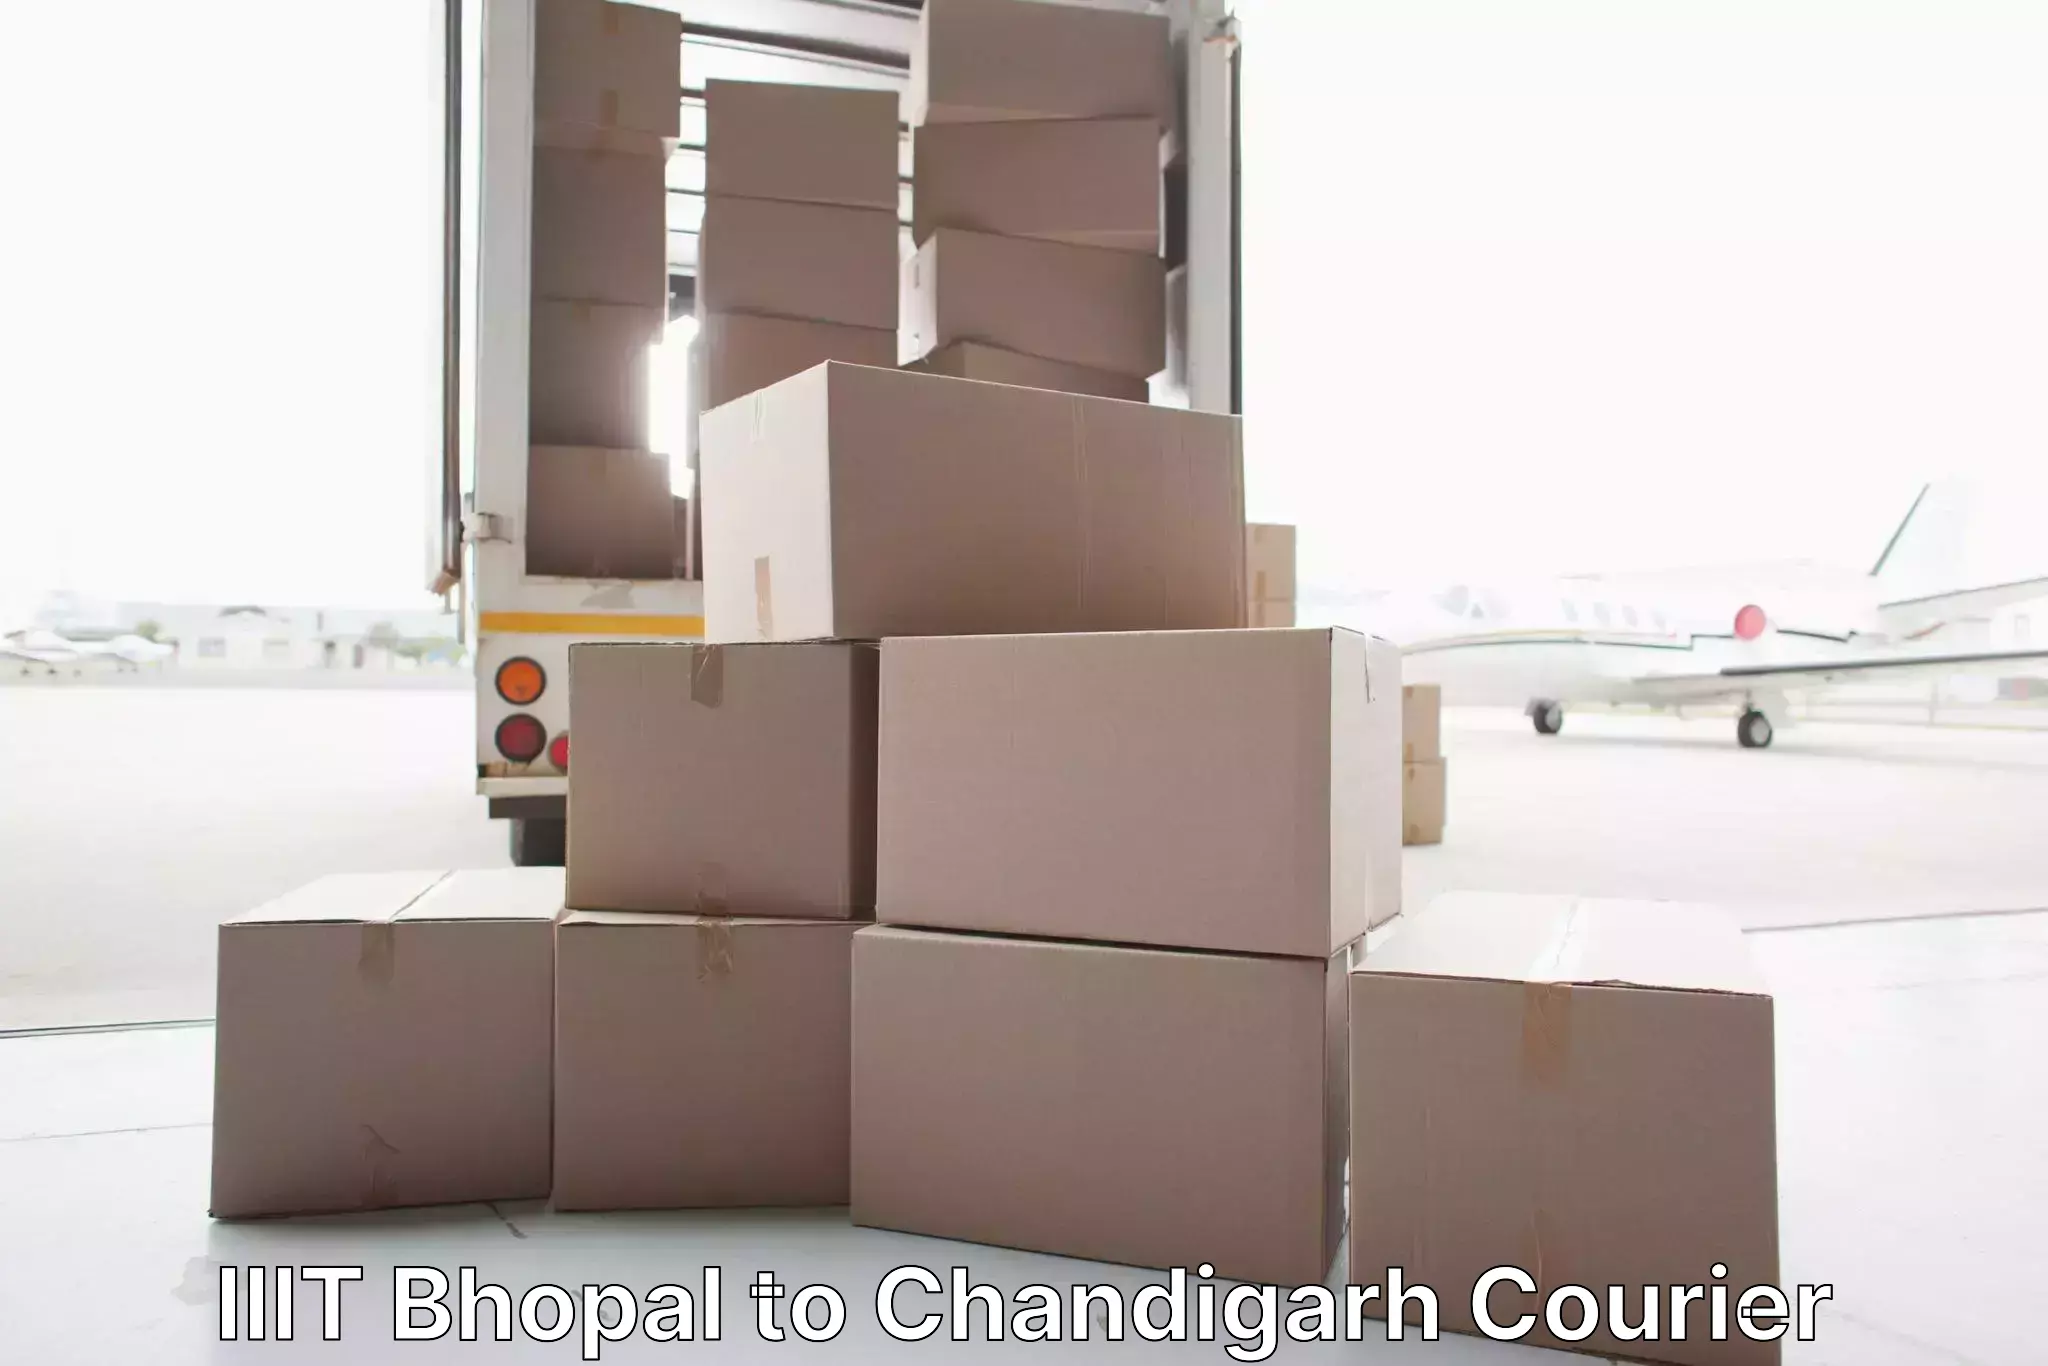 Professional moving company IIIT Bhopal to Panjab University Chandigarh